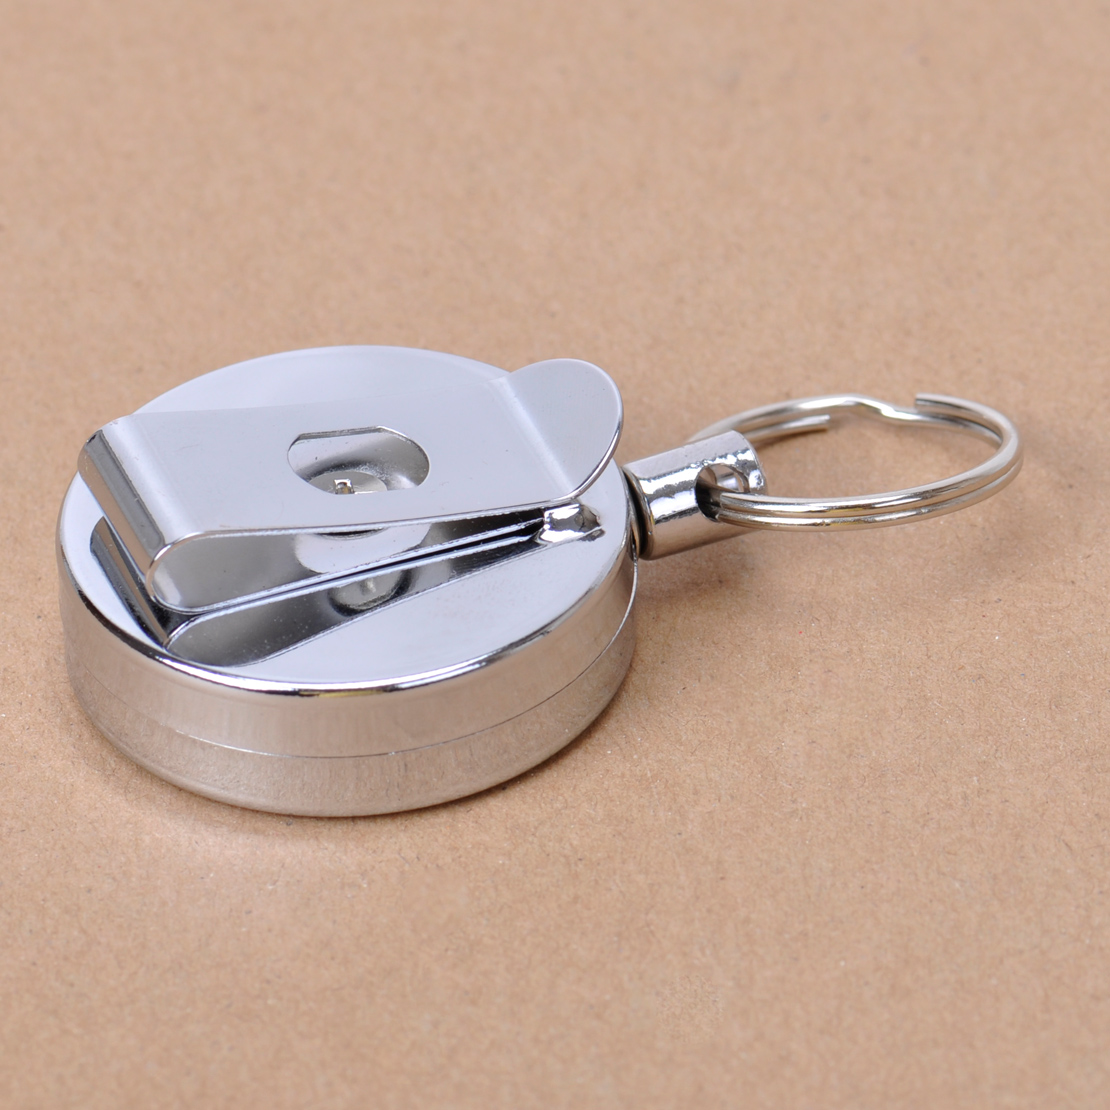 Retractable Recoil Key Chain Key ring reel Belt Clip Badge ID Card ...